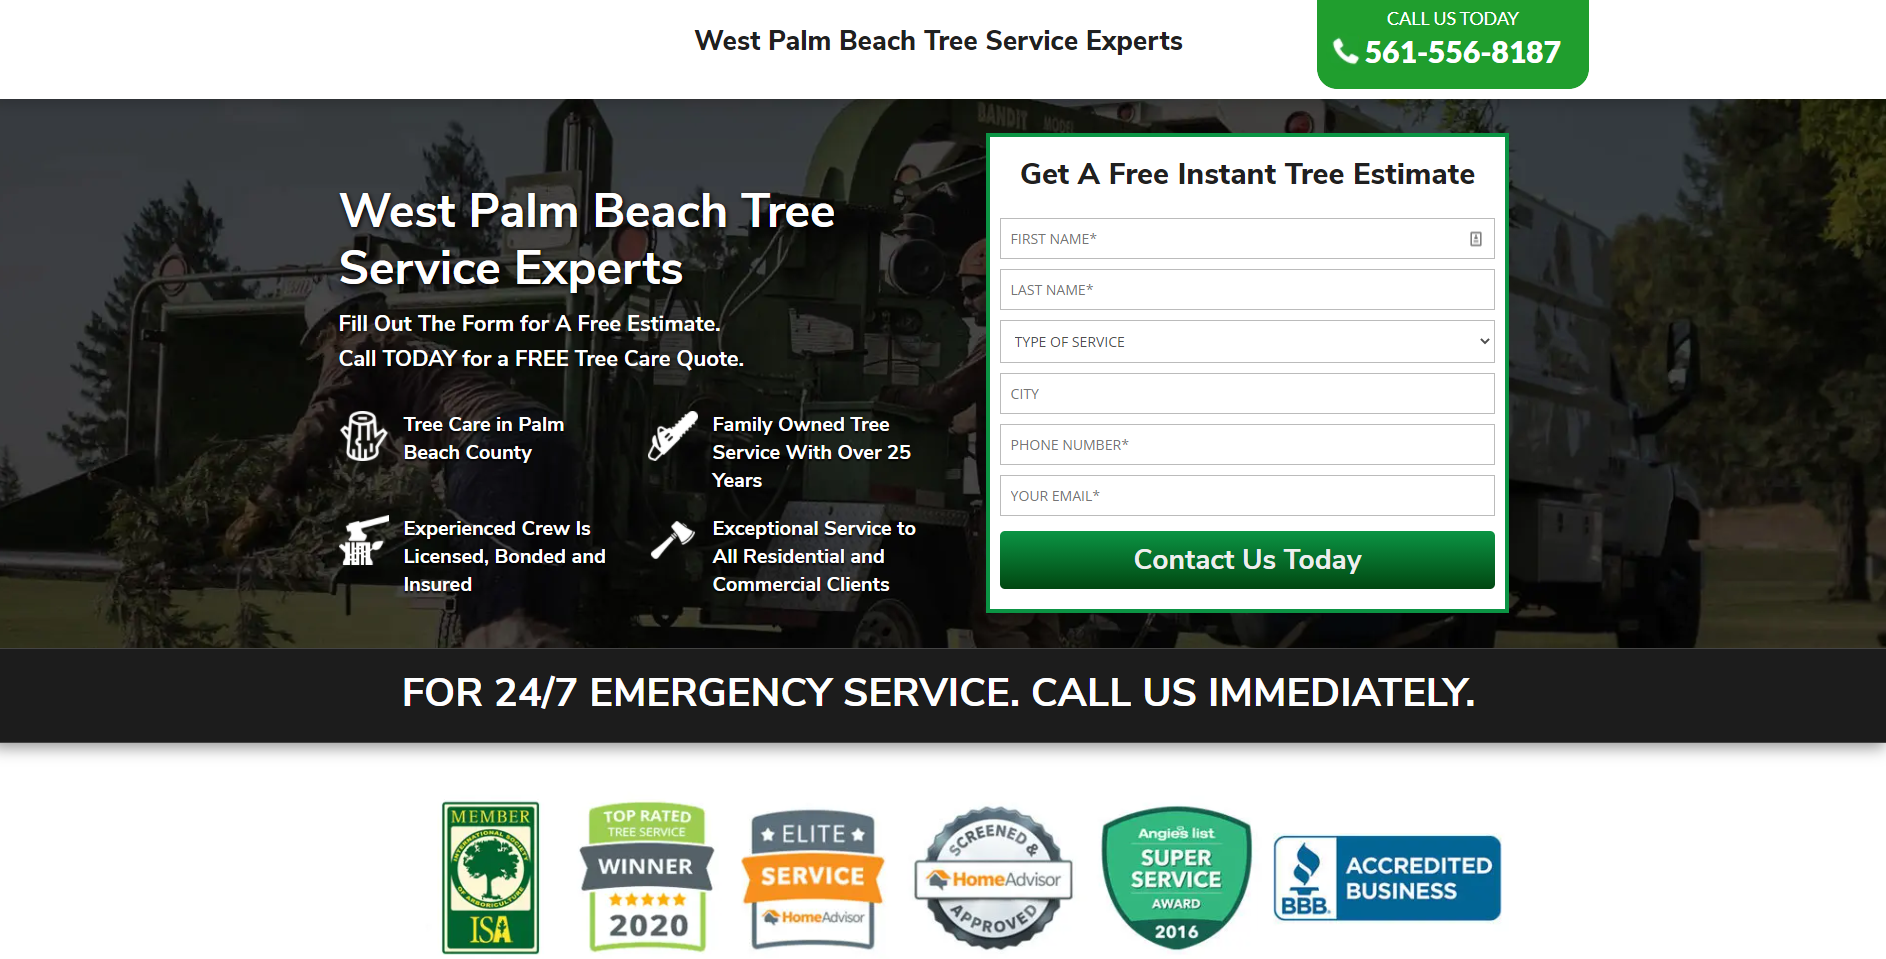 West Palm Beach Tree Service Experts